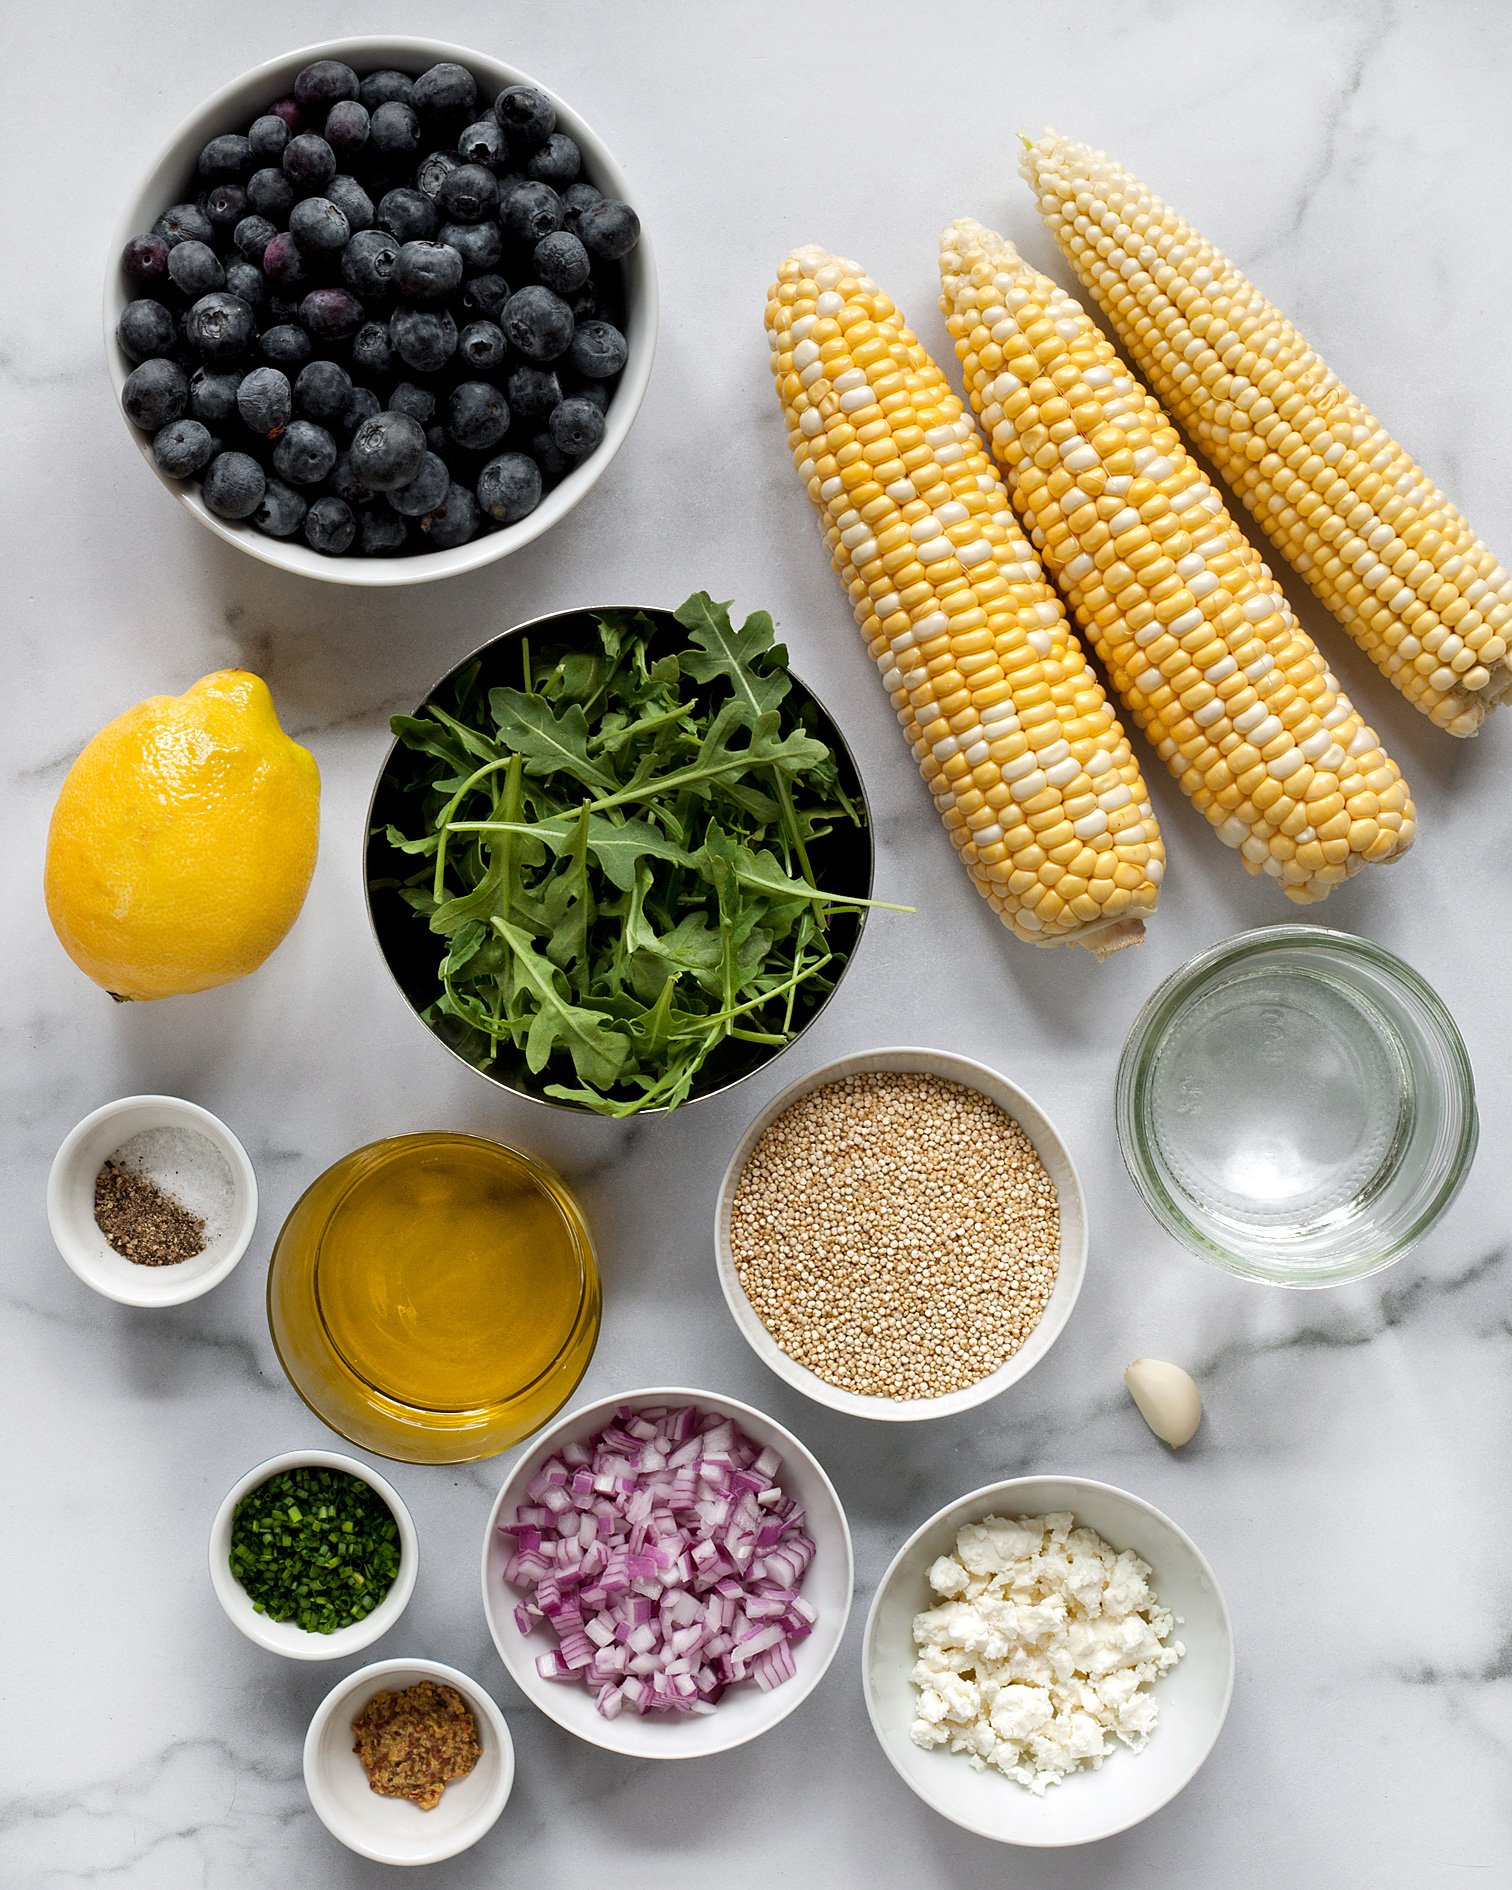 Ingredients including blueberries, corn, arugula, quinoa and feta.